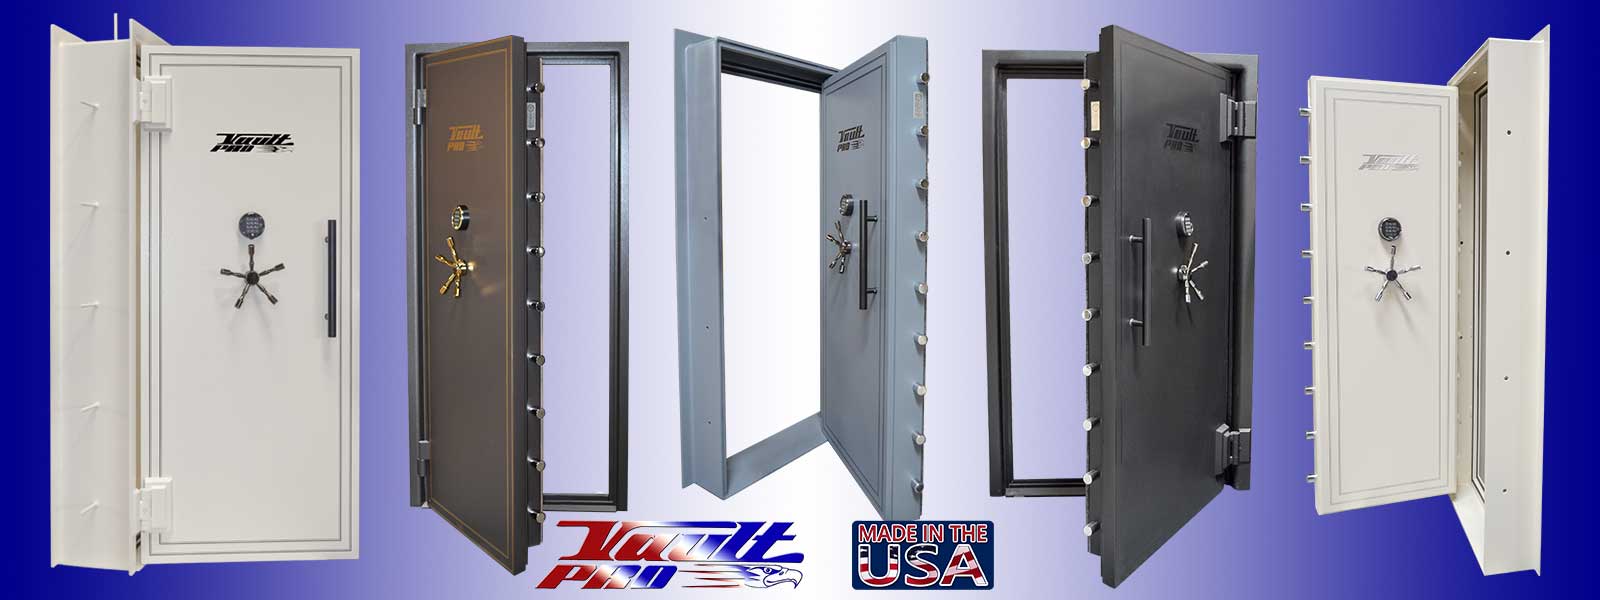 Vault Doors and Shelter Vault Doors Made in USA